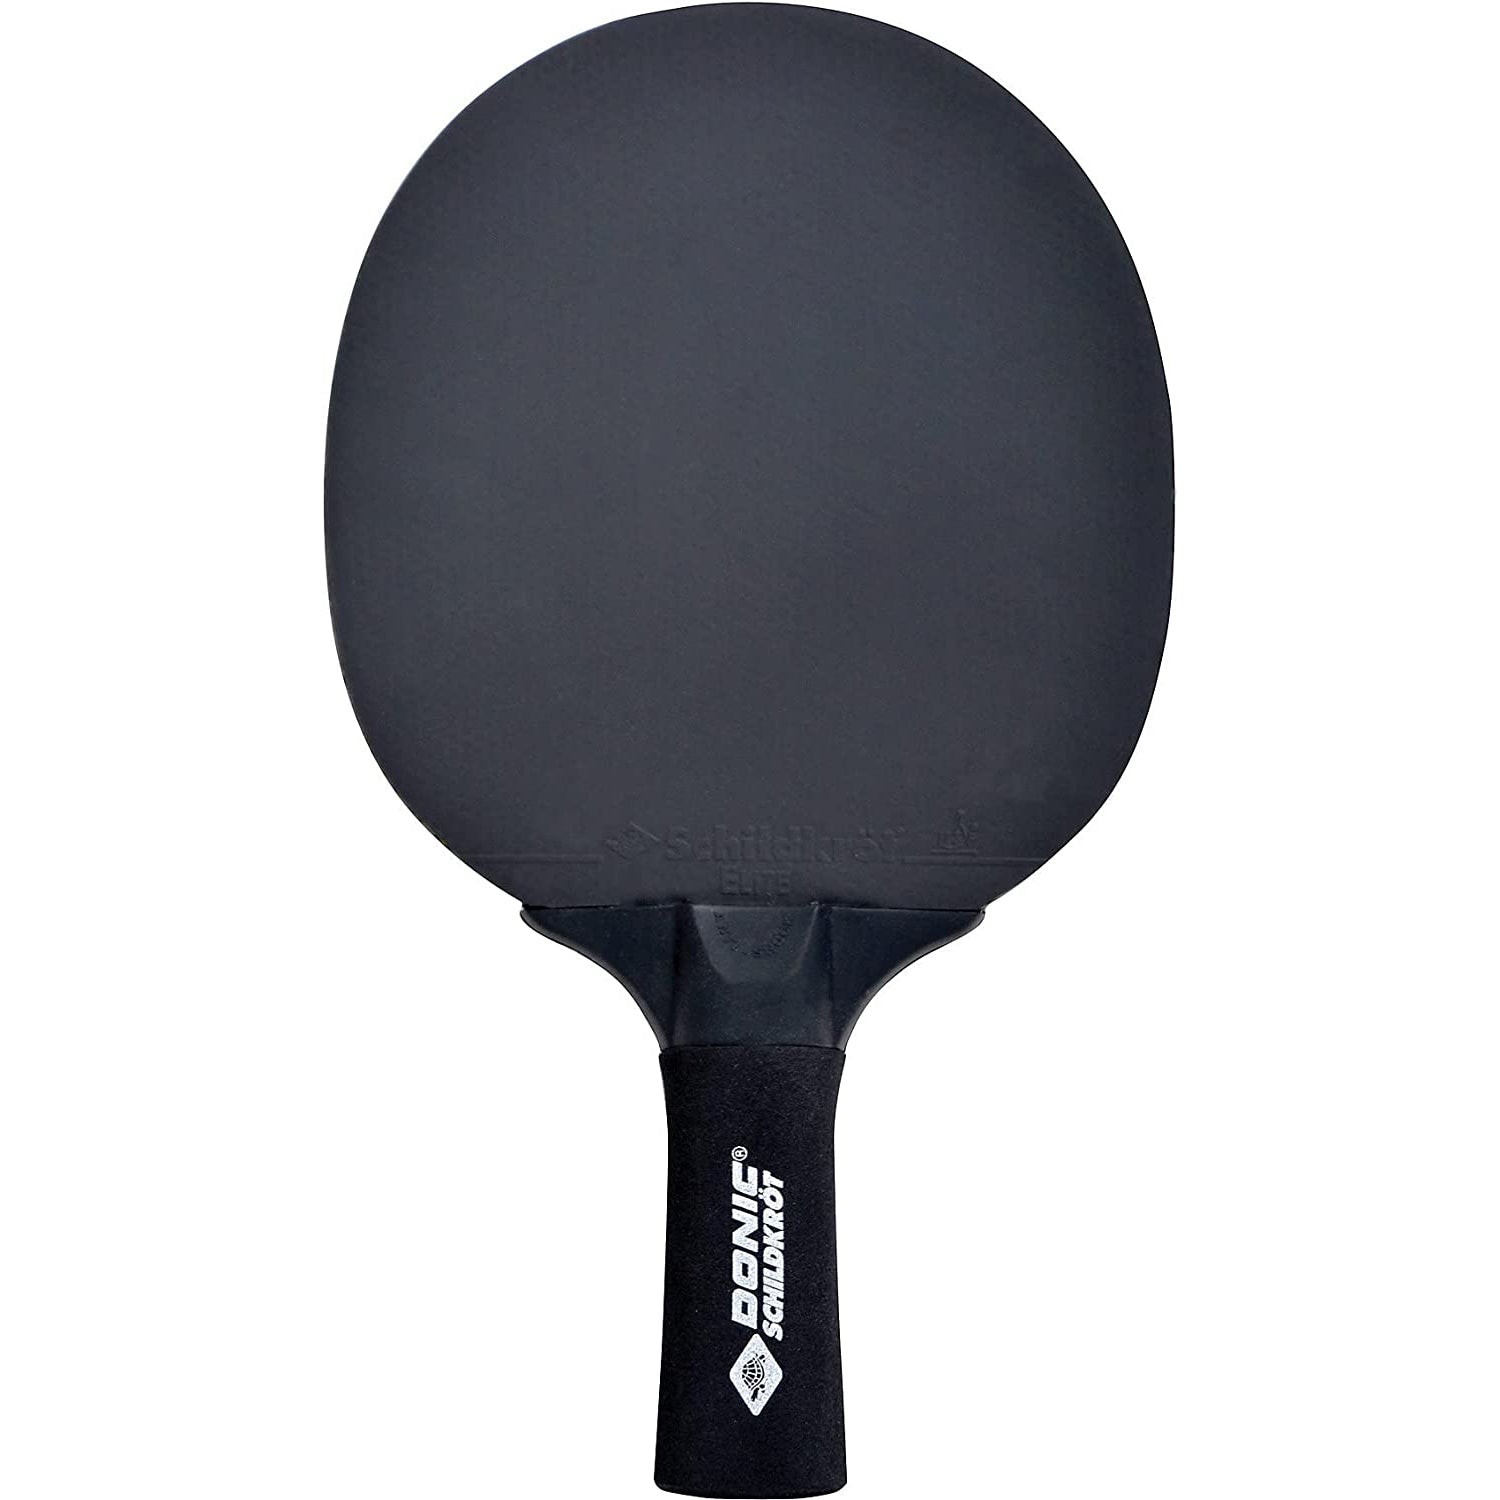 Donic Sensation 500 Table Tennis Bat with Cover - Best Price online Prokicksports.com